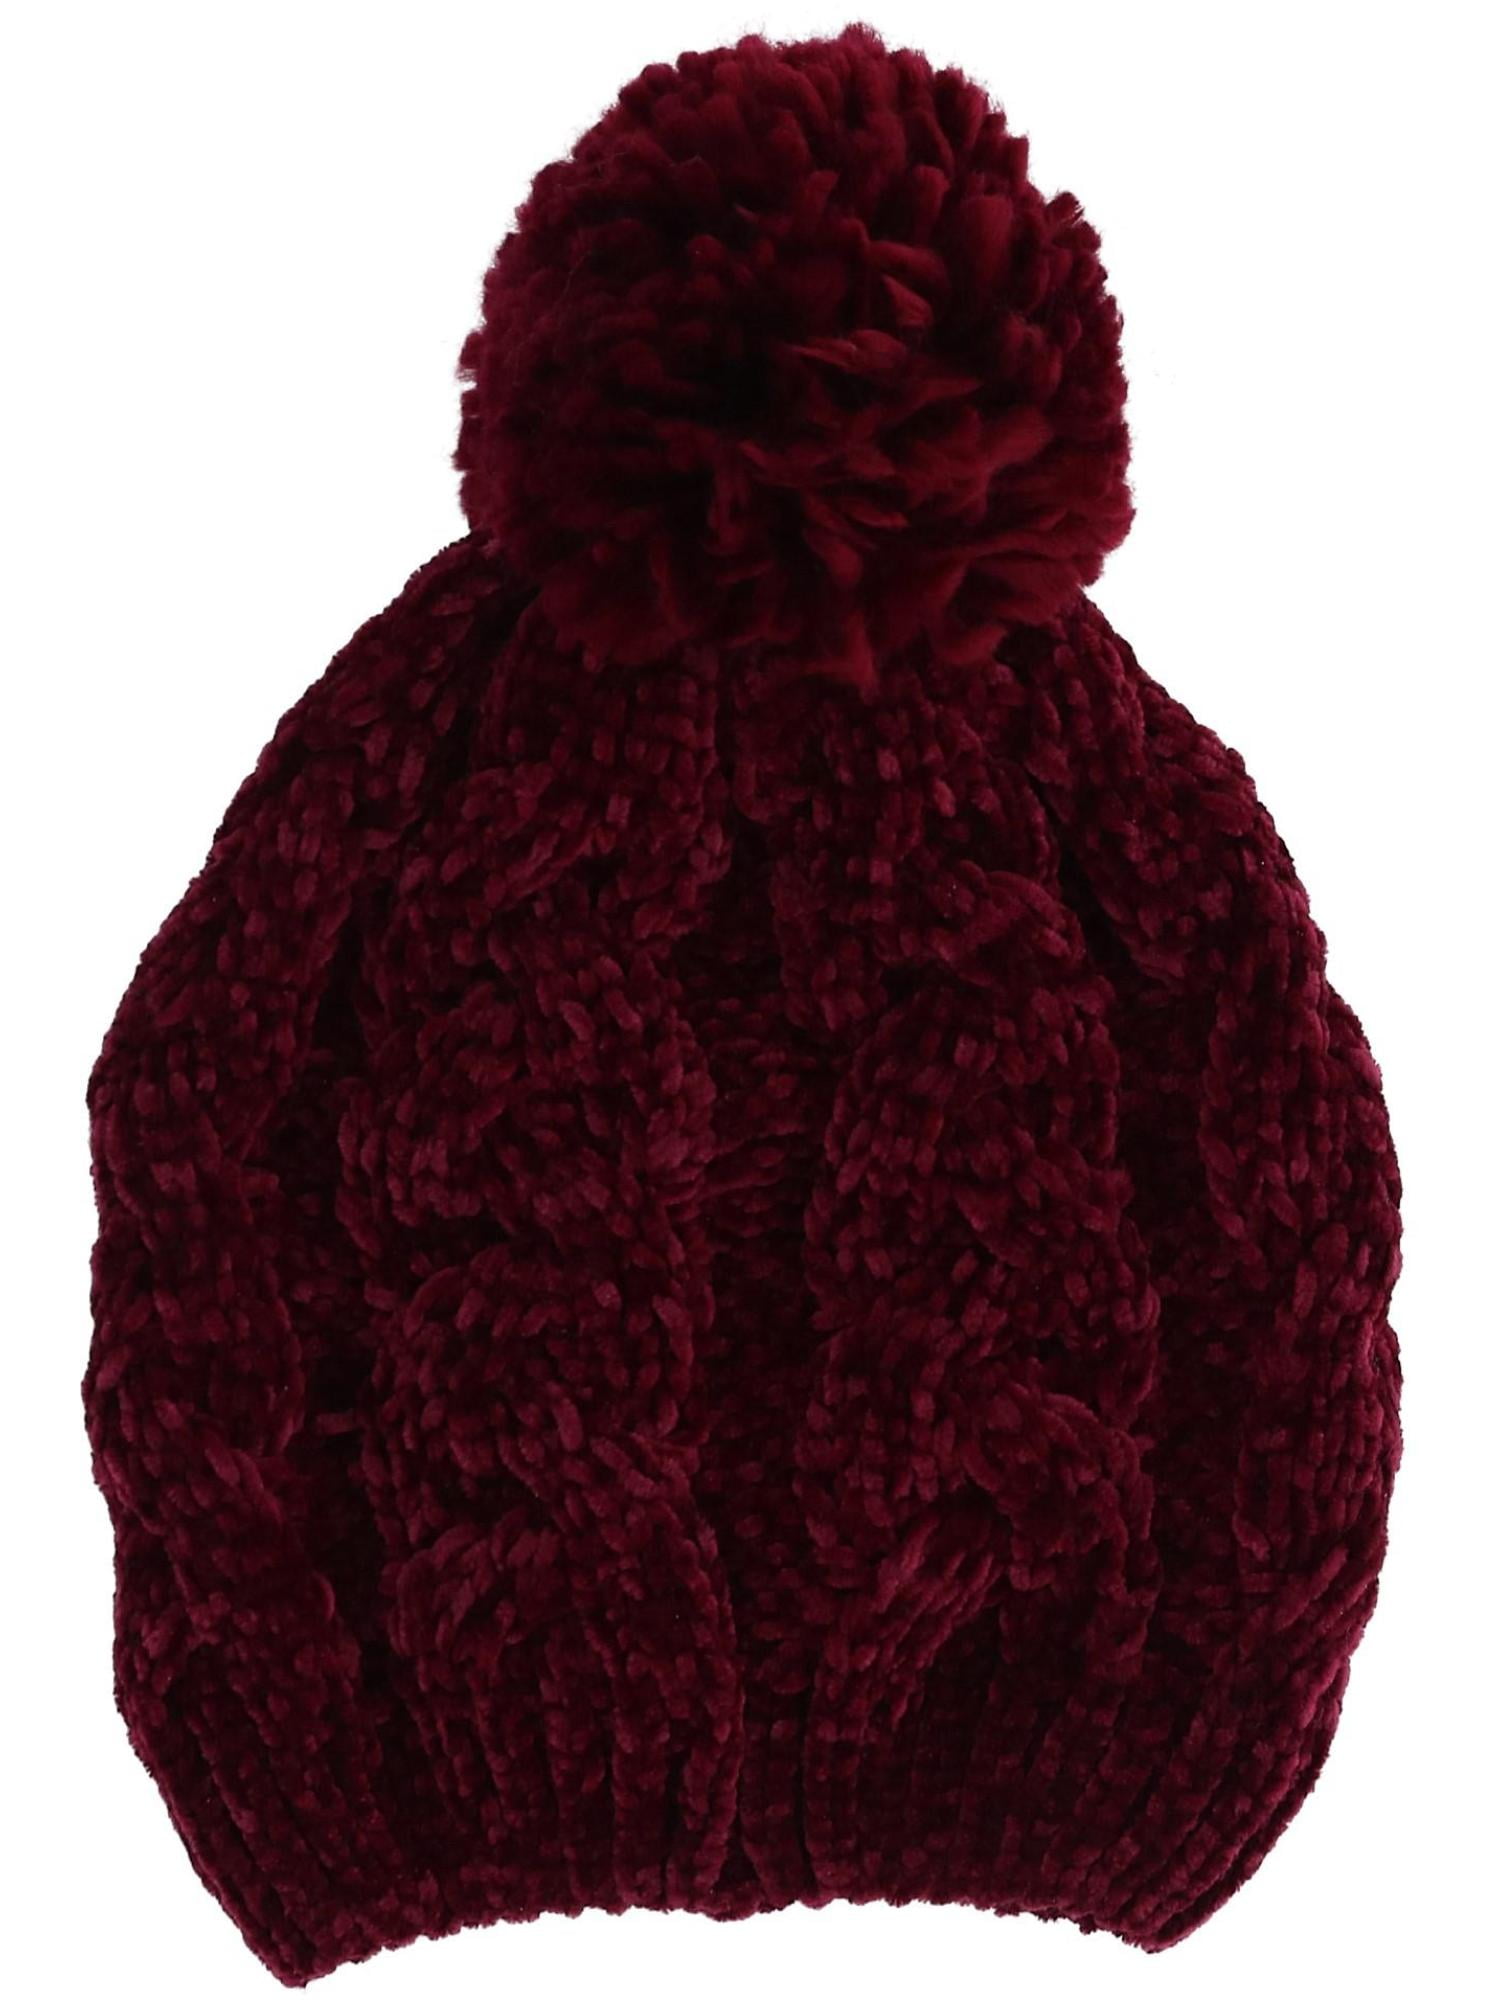 HATOOZE Beanie Hat Winter Knit Hat for Women Girls Double Layer Fleece Lining Bobble Hat with Detachable Faux Fur Pom Pom